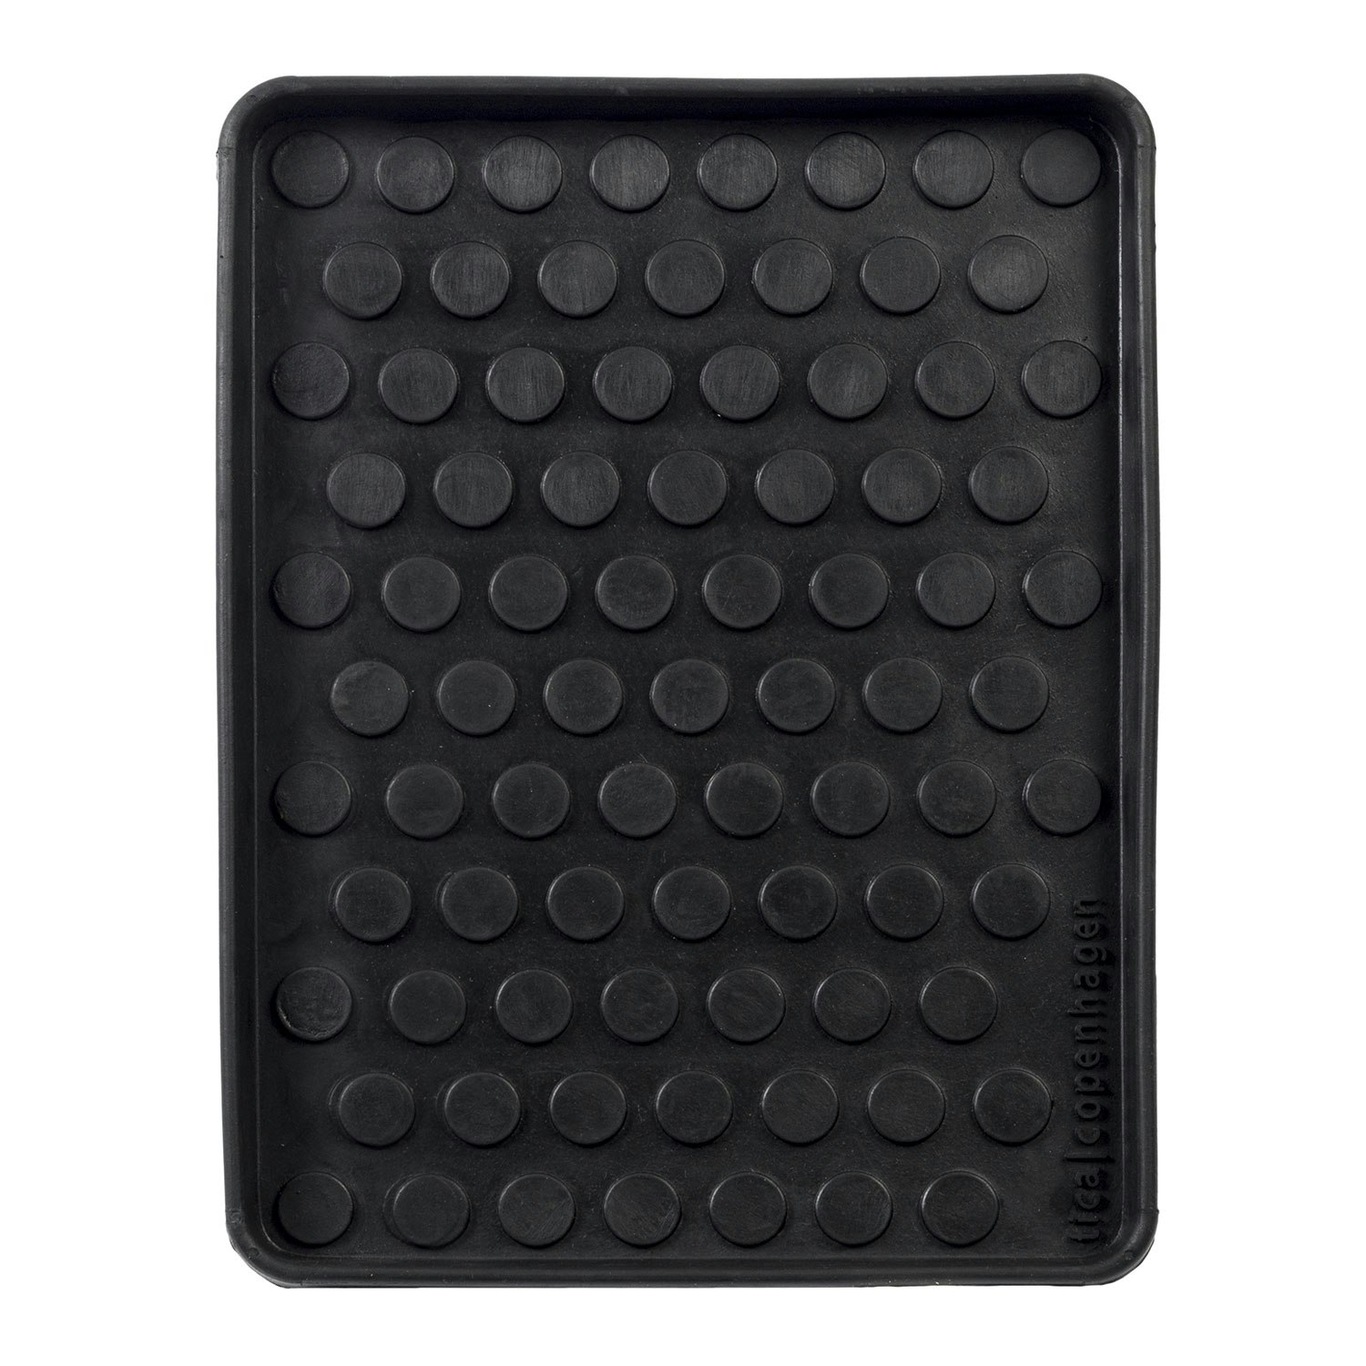 https://royaldesign.com/image/2/tica-copenhagen-dot-shoe-tray-black-6?w=800&quality=80